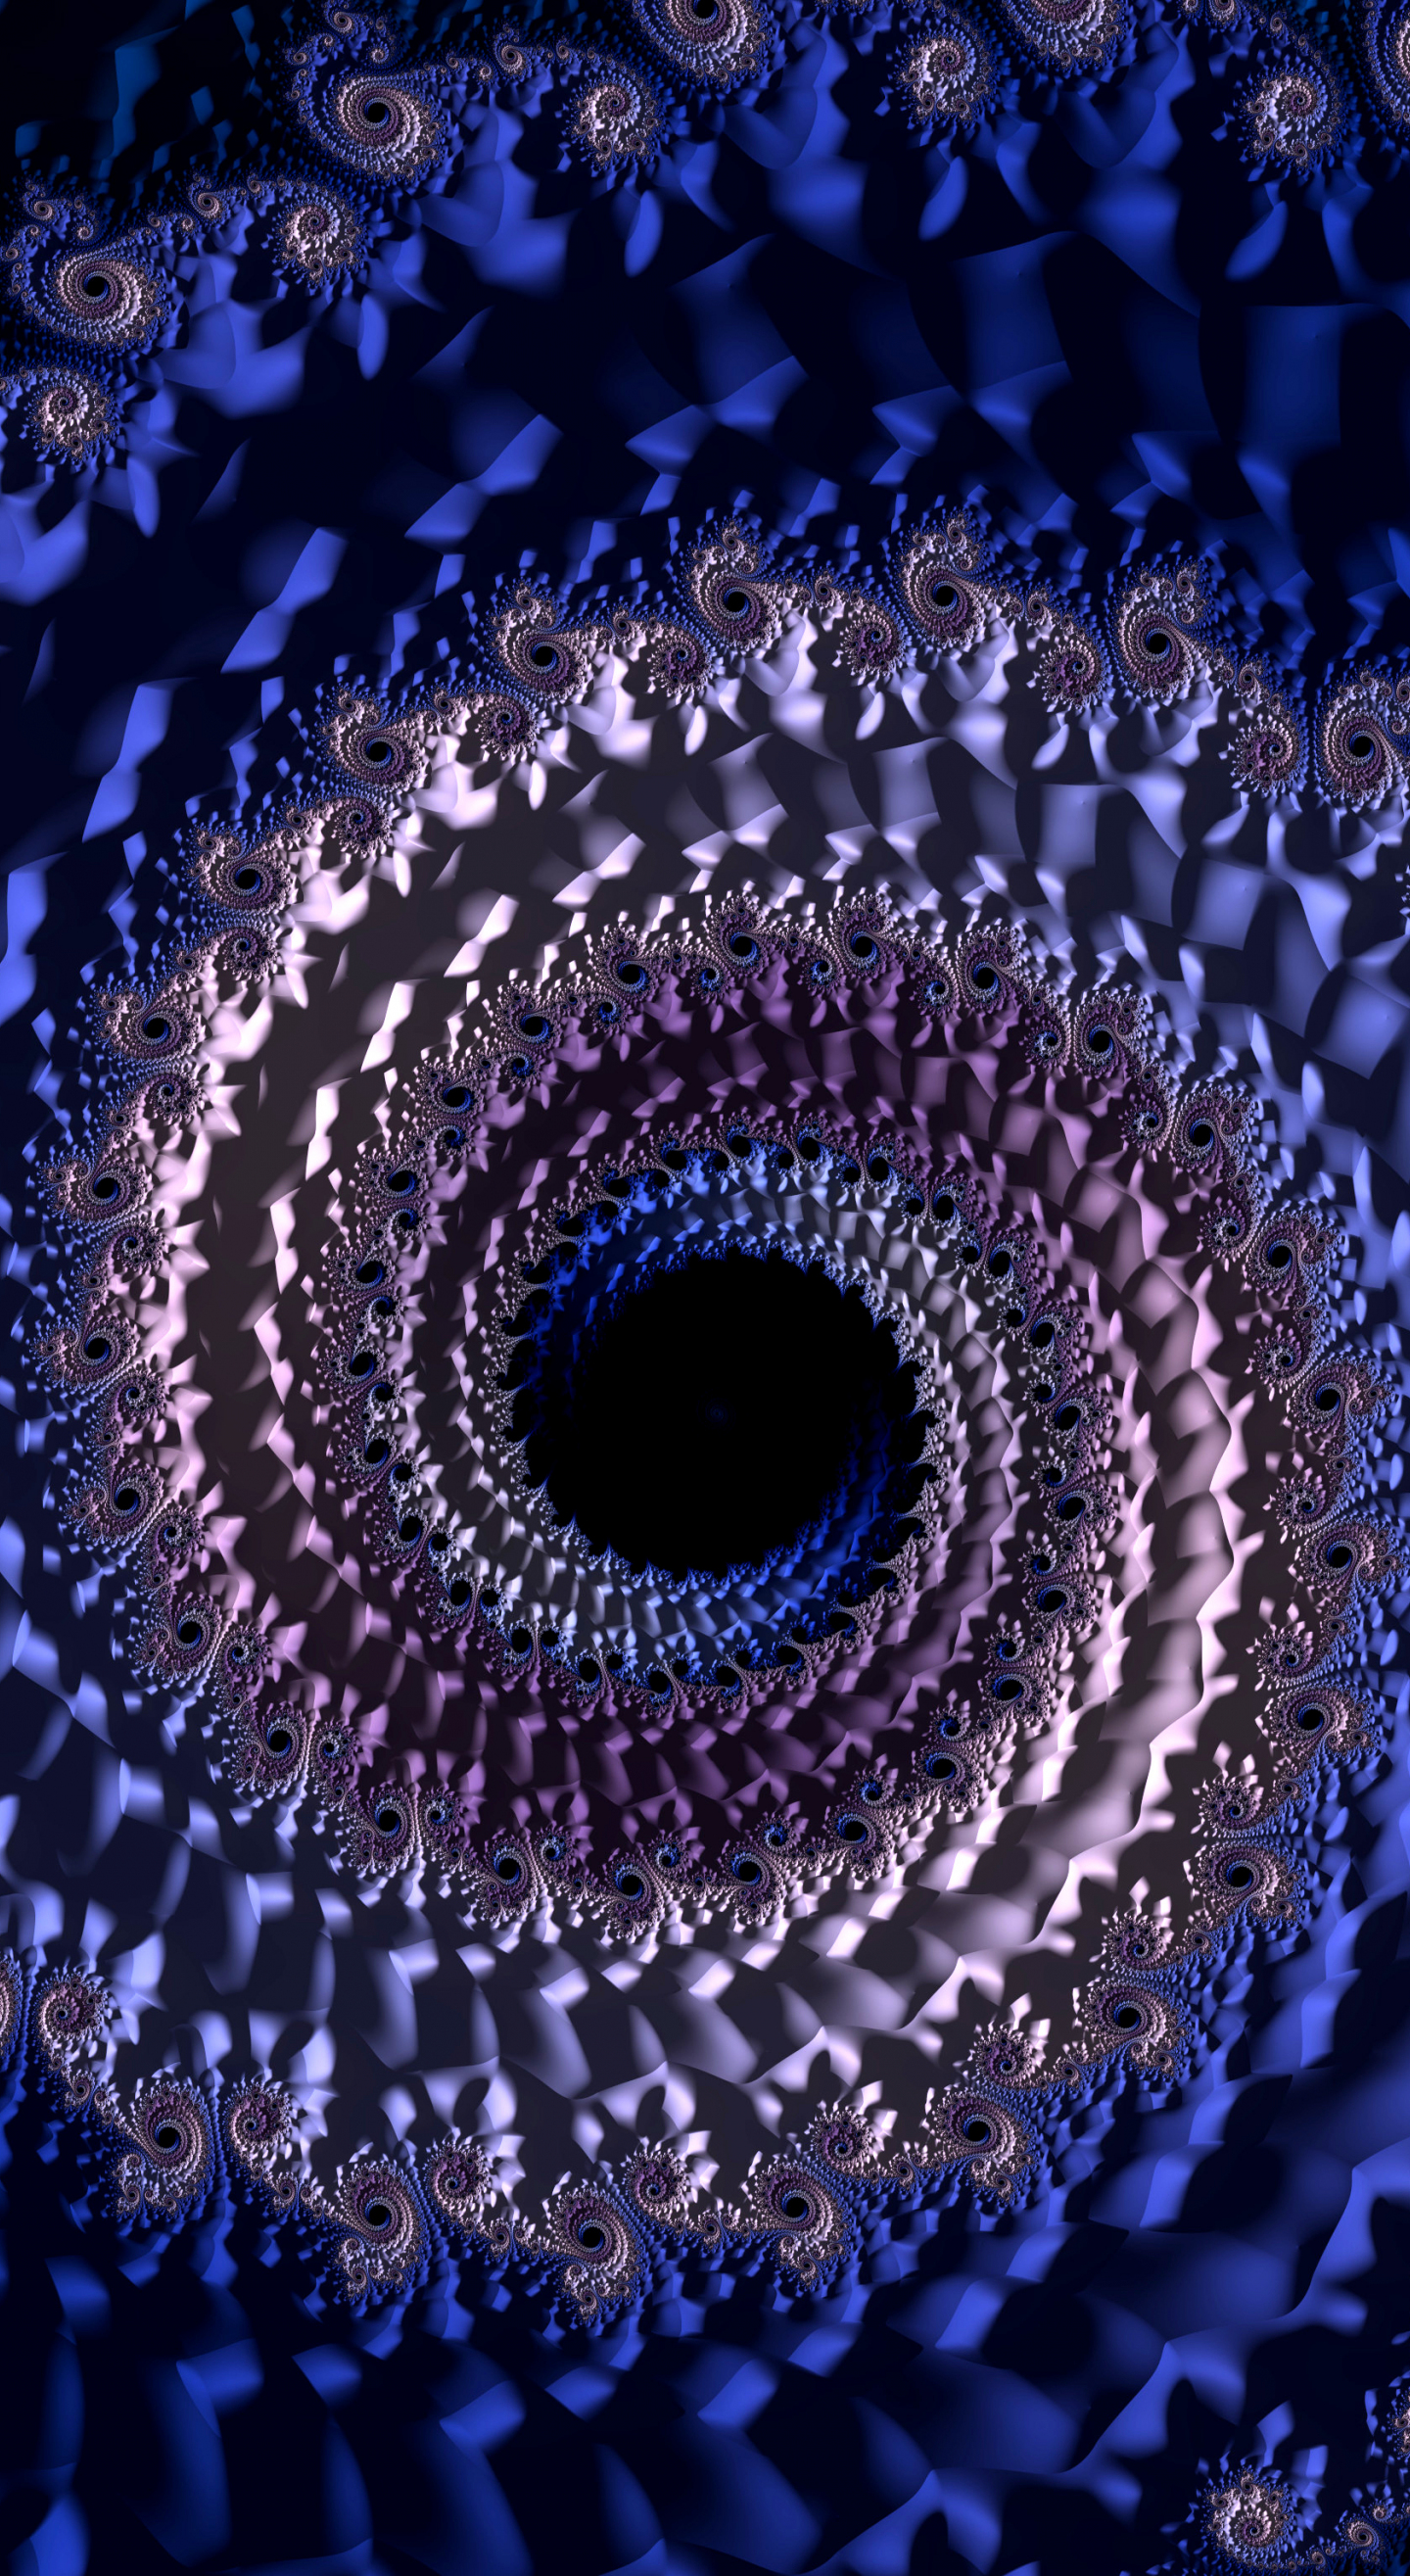 Download wallpaper 1440x2630 blue fractal, vortex, swirling, 3d, samsung  galaxy note 8, 1440x2630 hd background, 22579